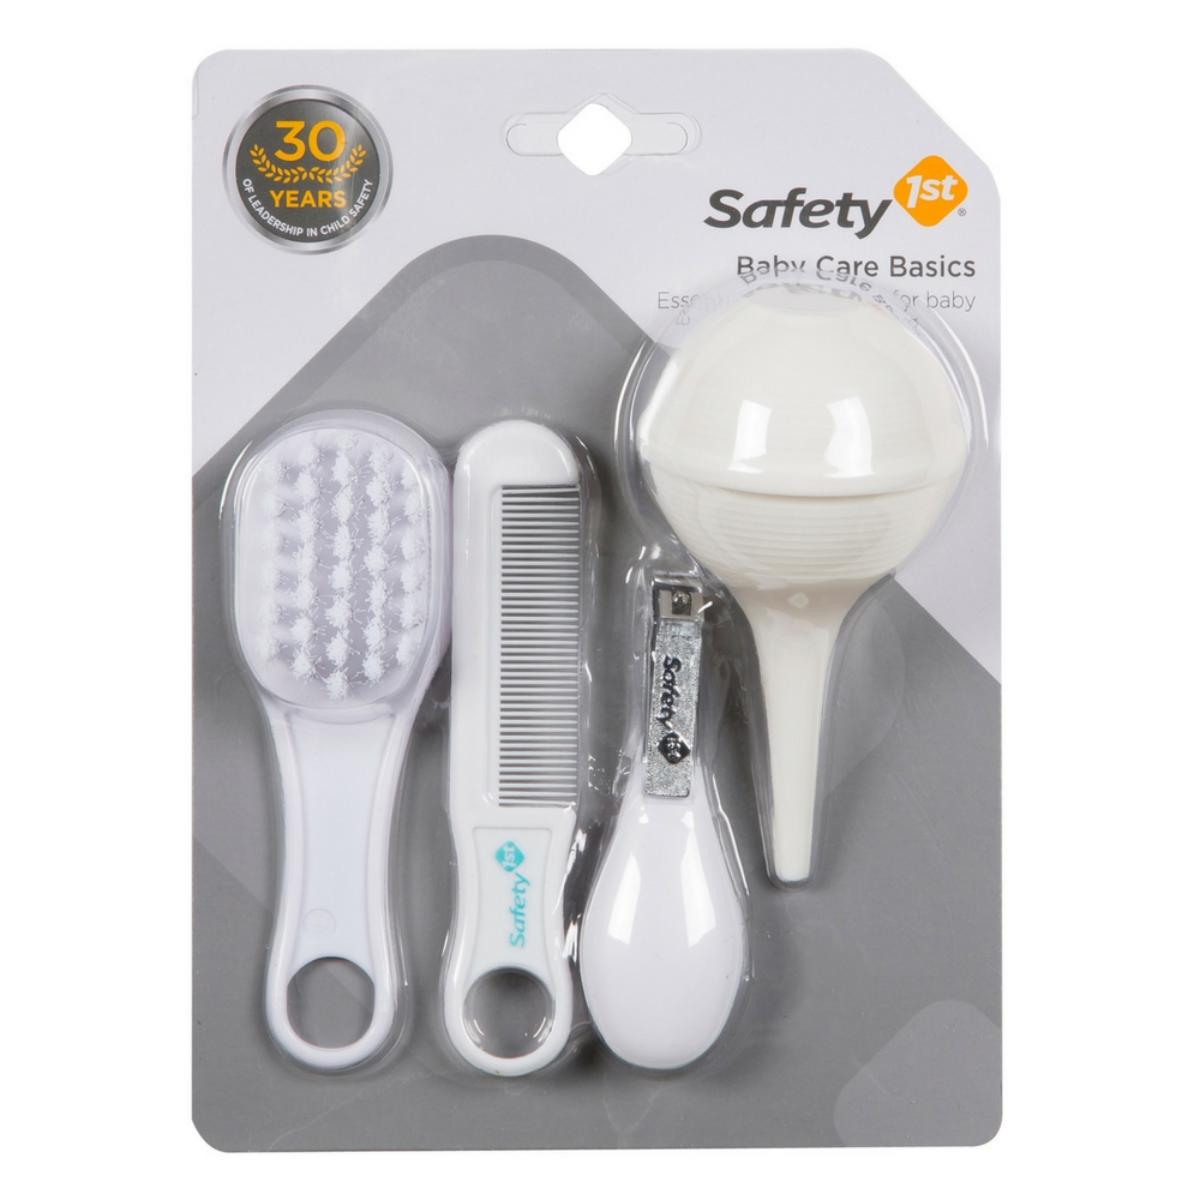 Safety 1st Baby Care Basics Set 4 Pack